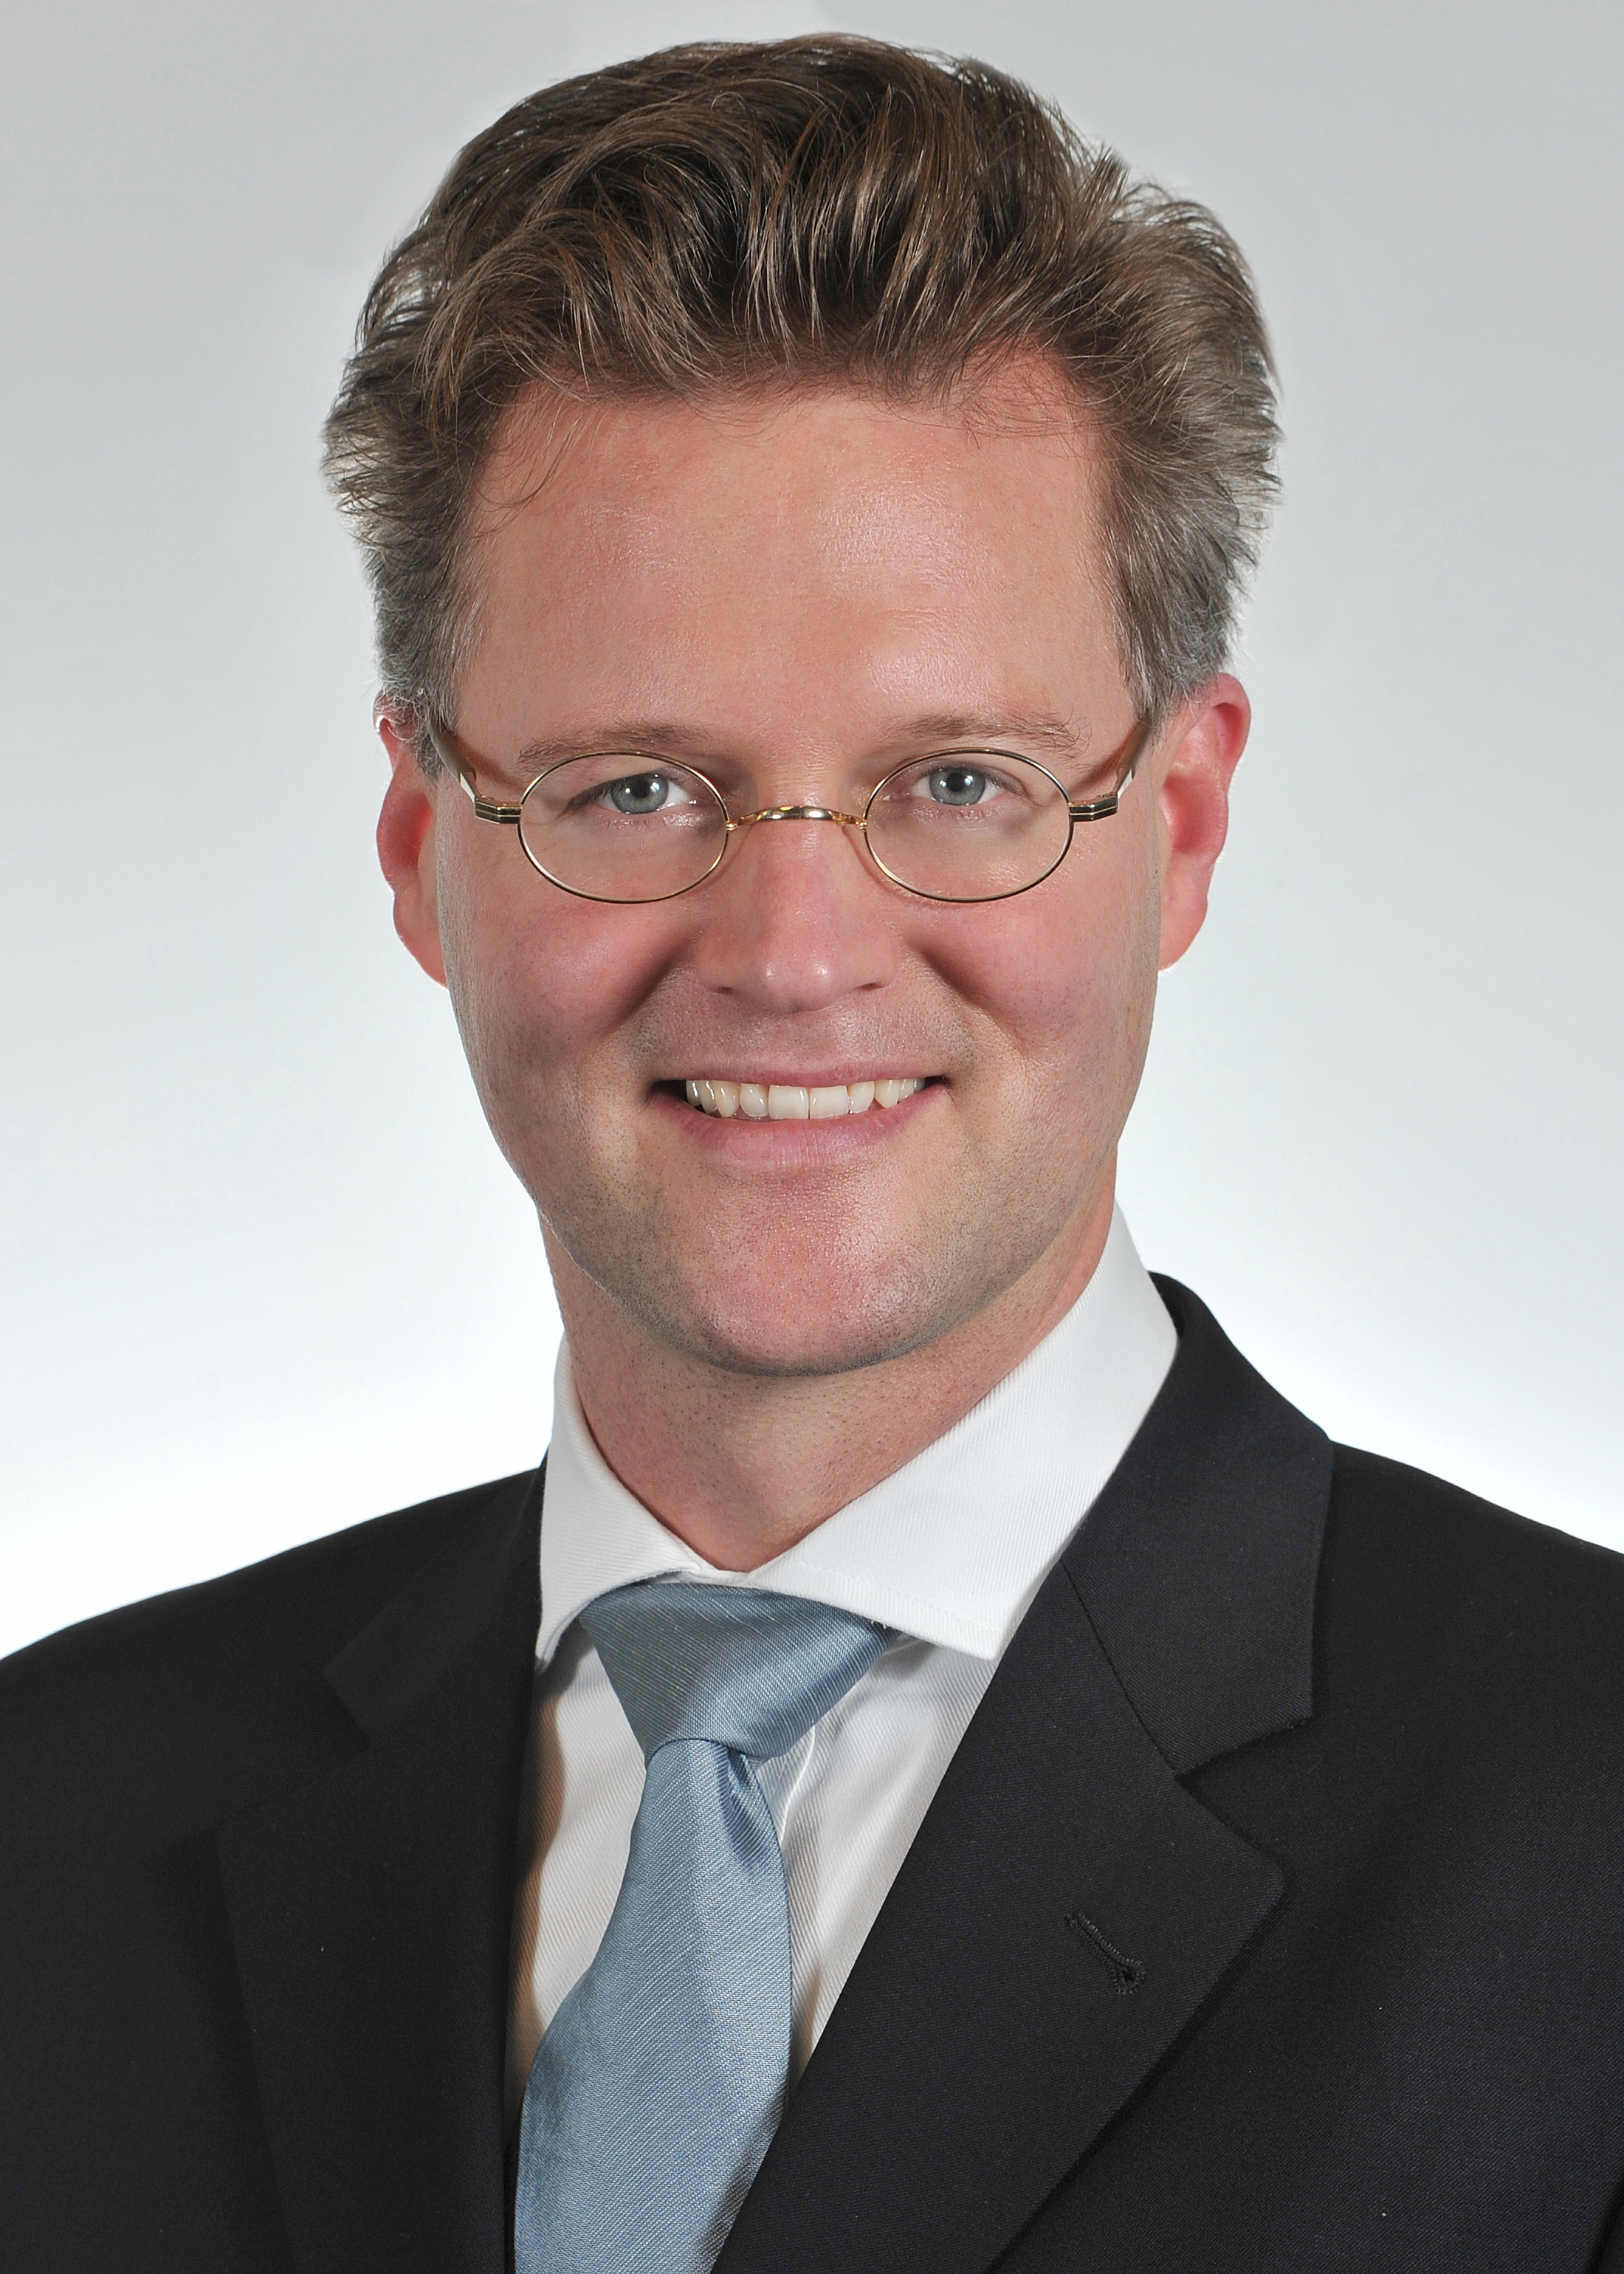 Joerg Ahrens, Global Head of Key Case Management, AGCS